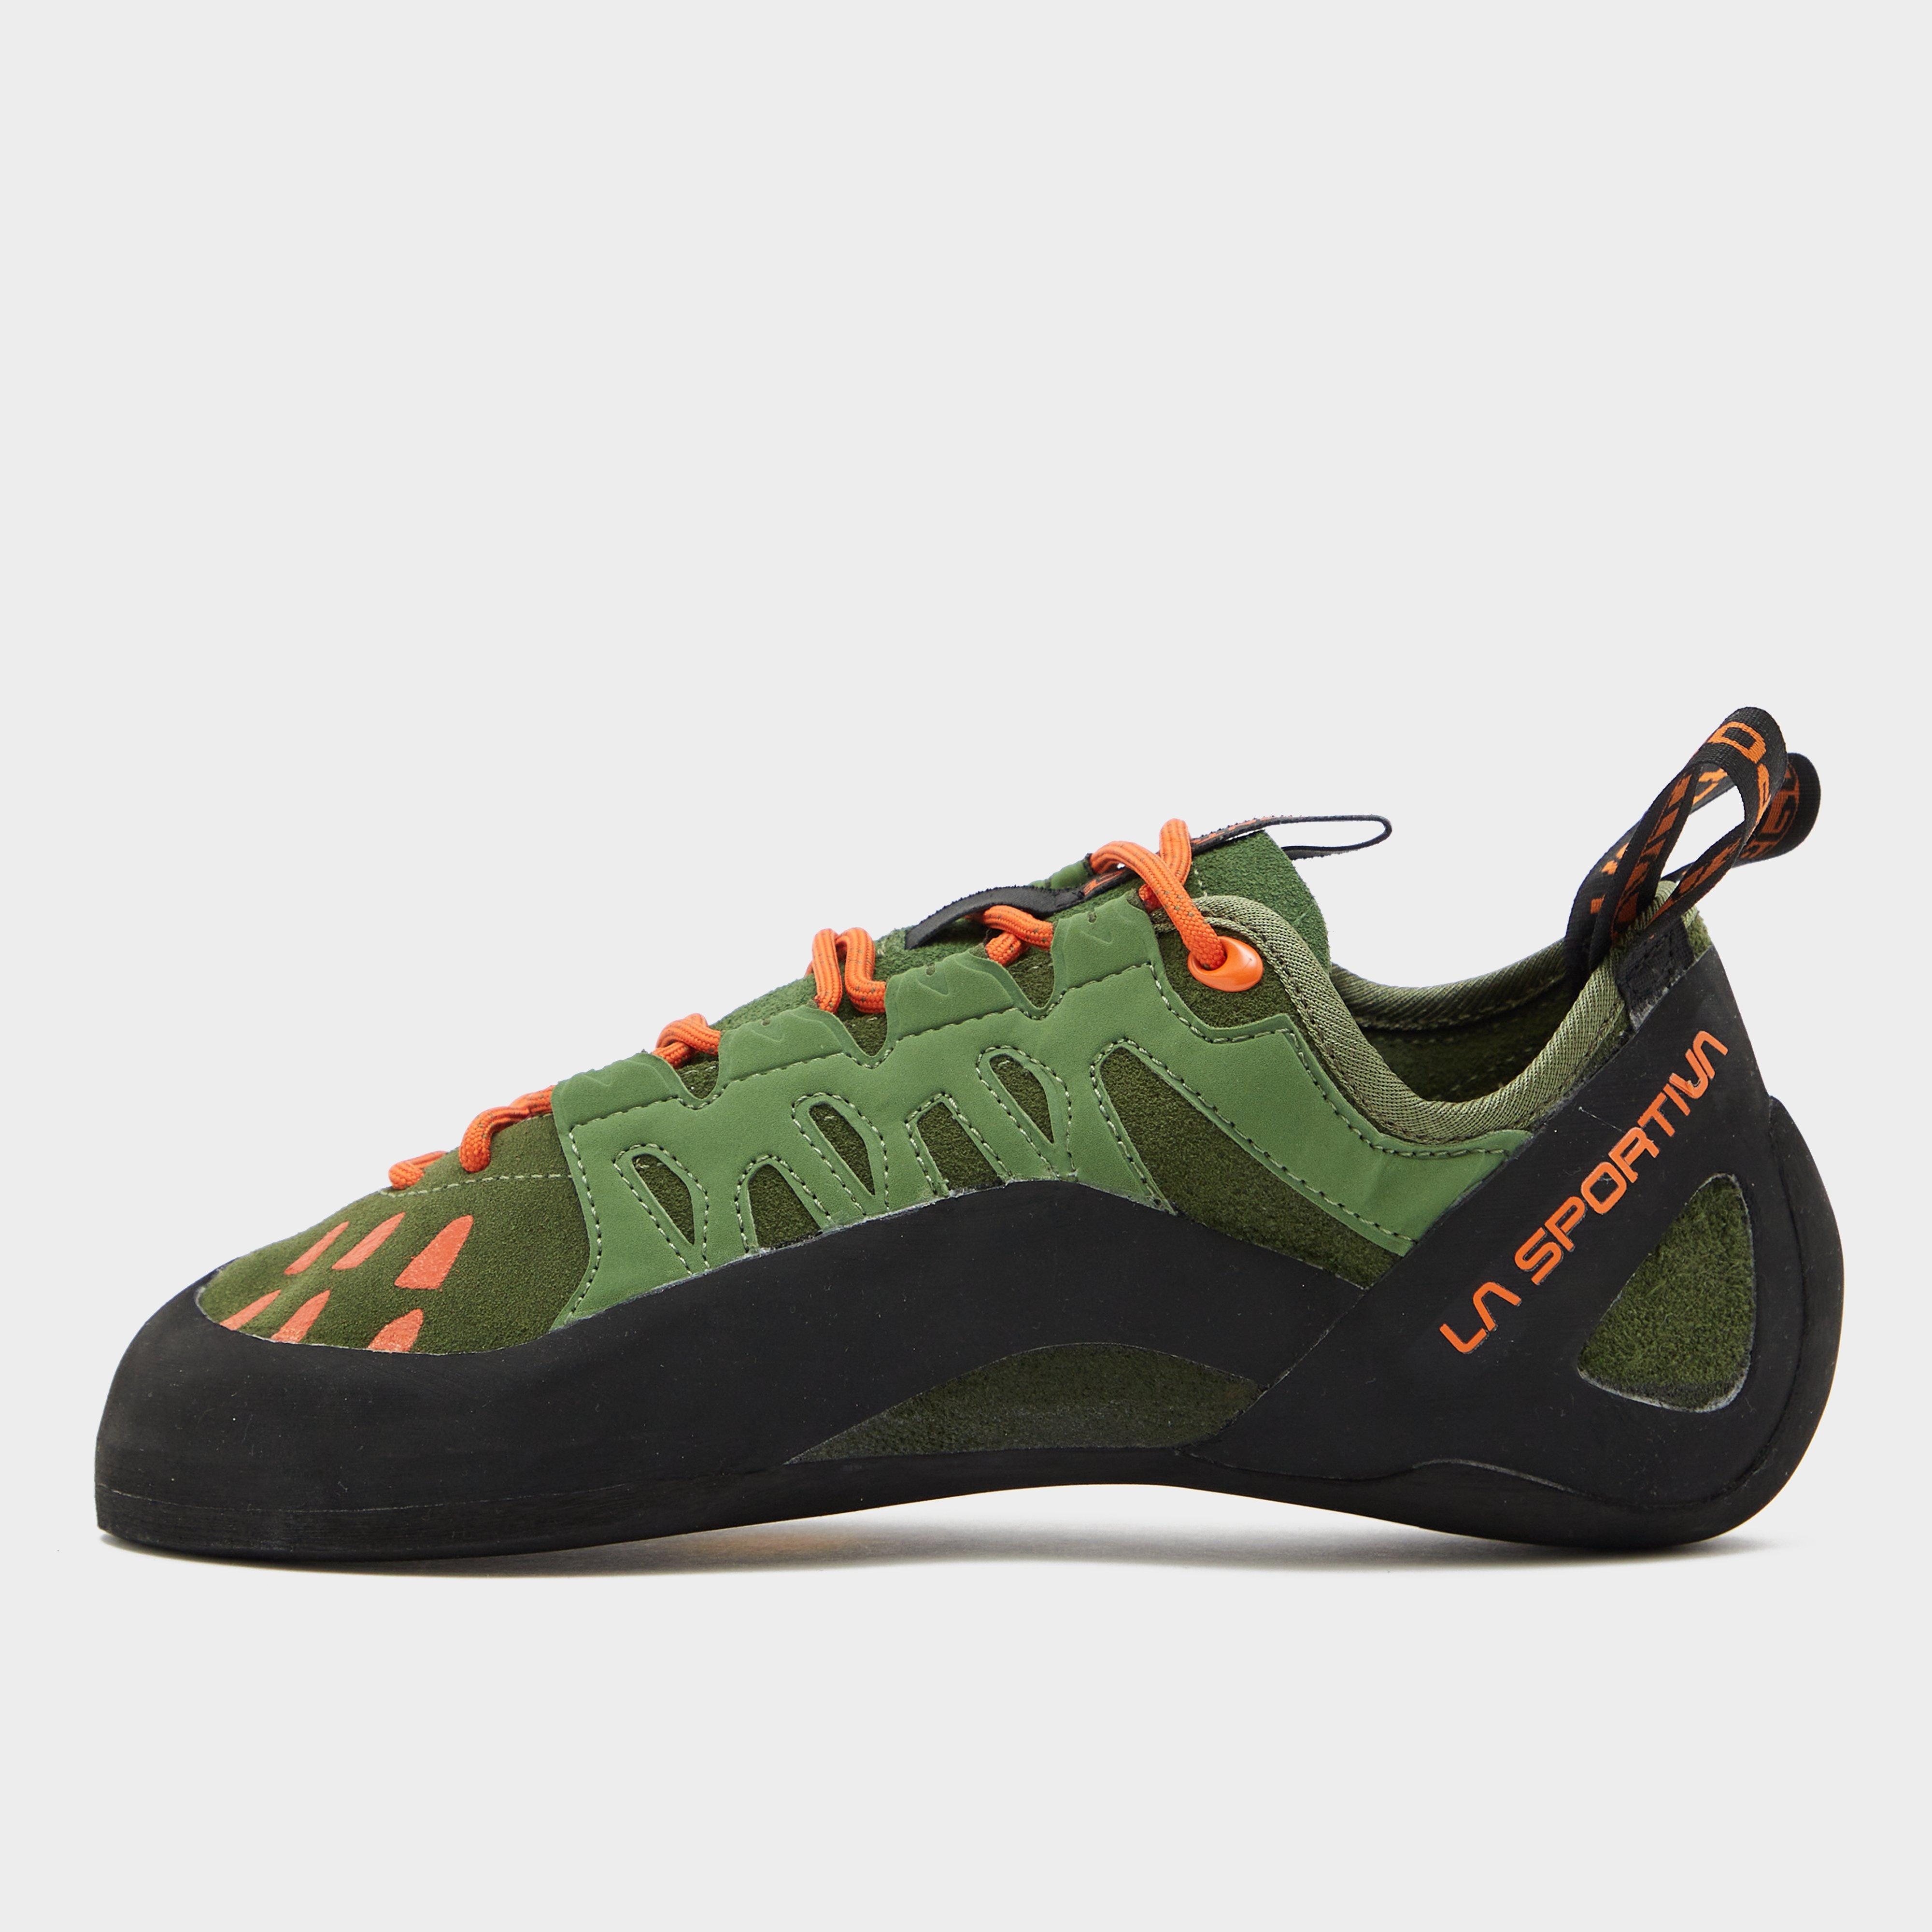 Photos - Trekking Shoes La Sportiva Men's Tarantulace Climbing Shoes, Multi Coloured 